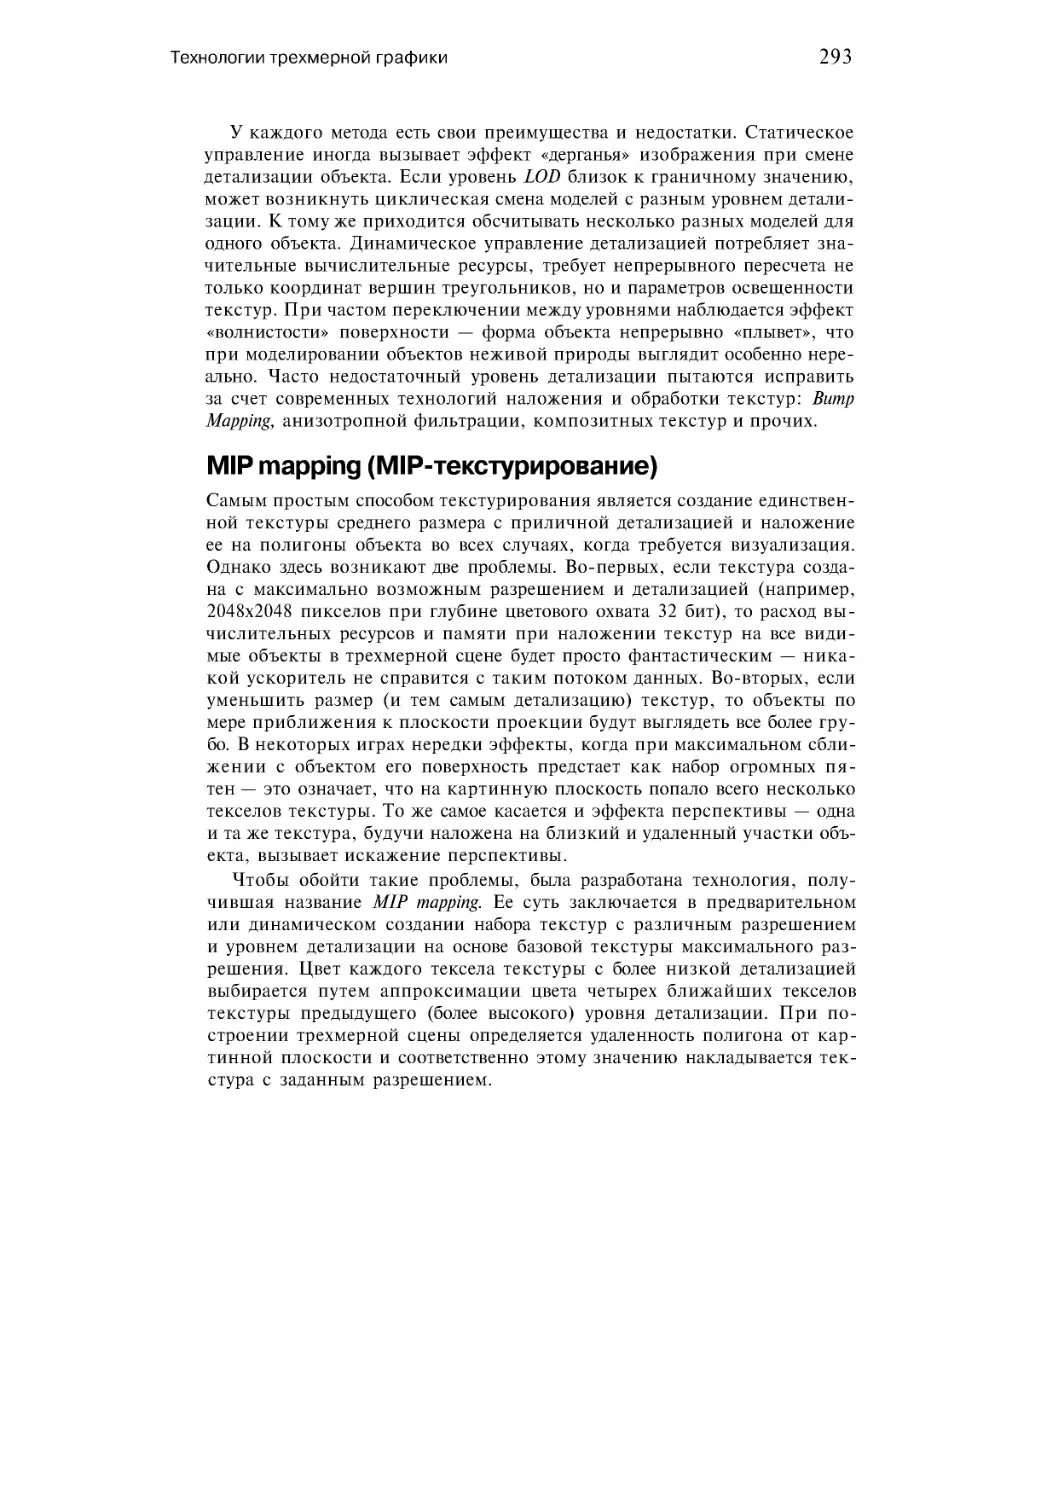 ﻿MIP mapping øMIP-текстурирование